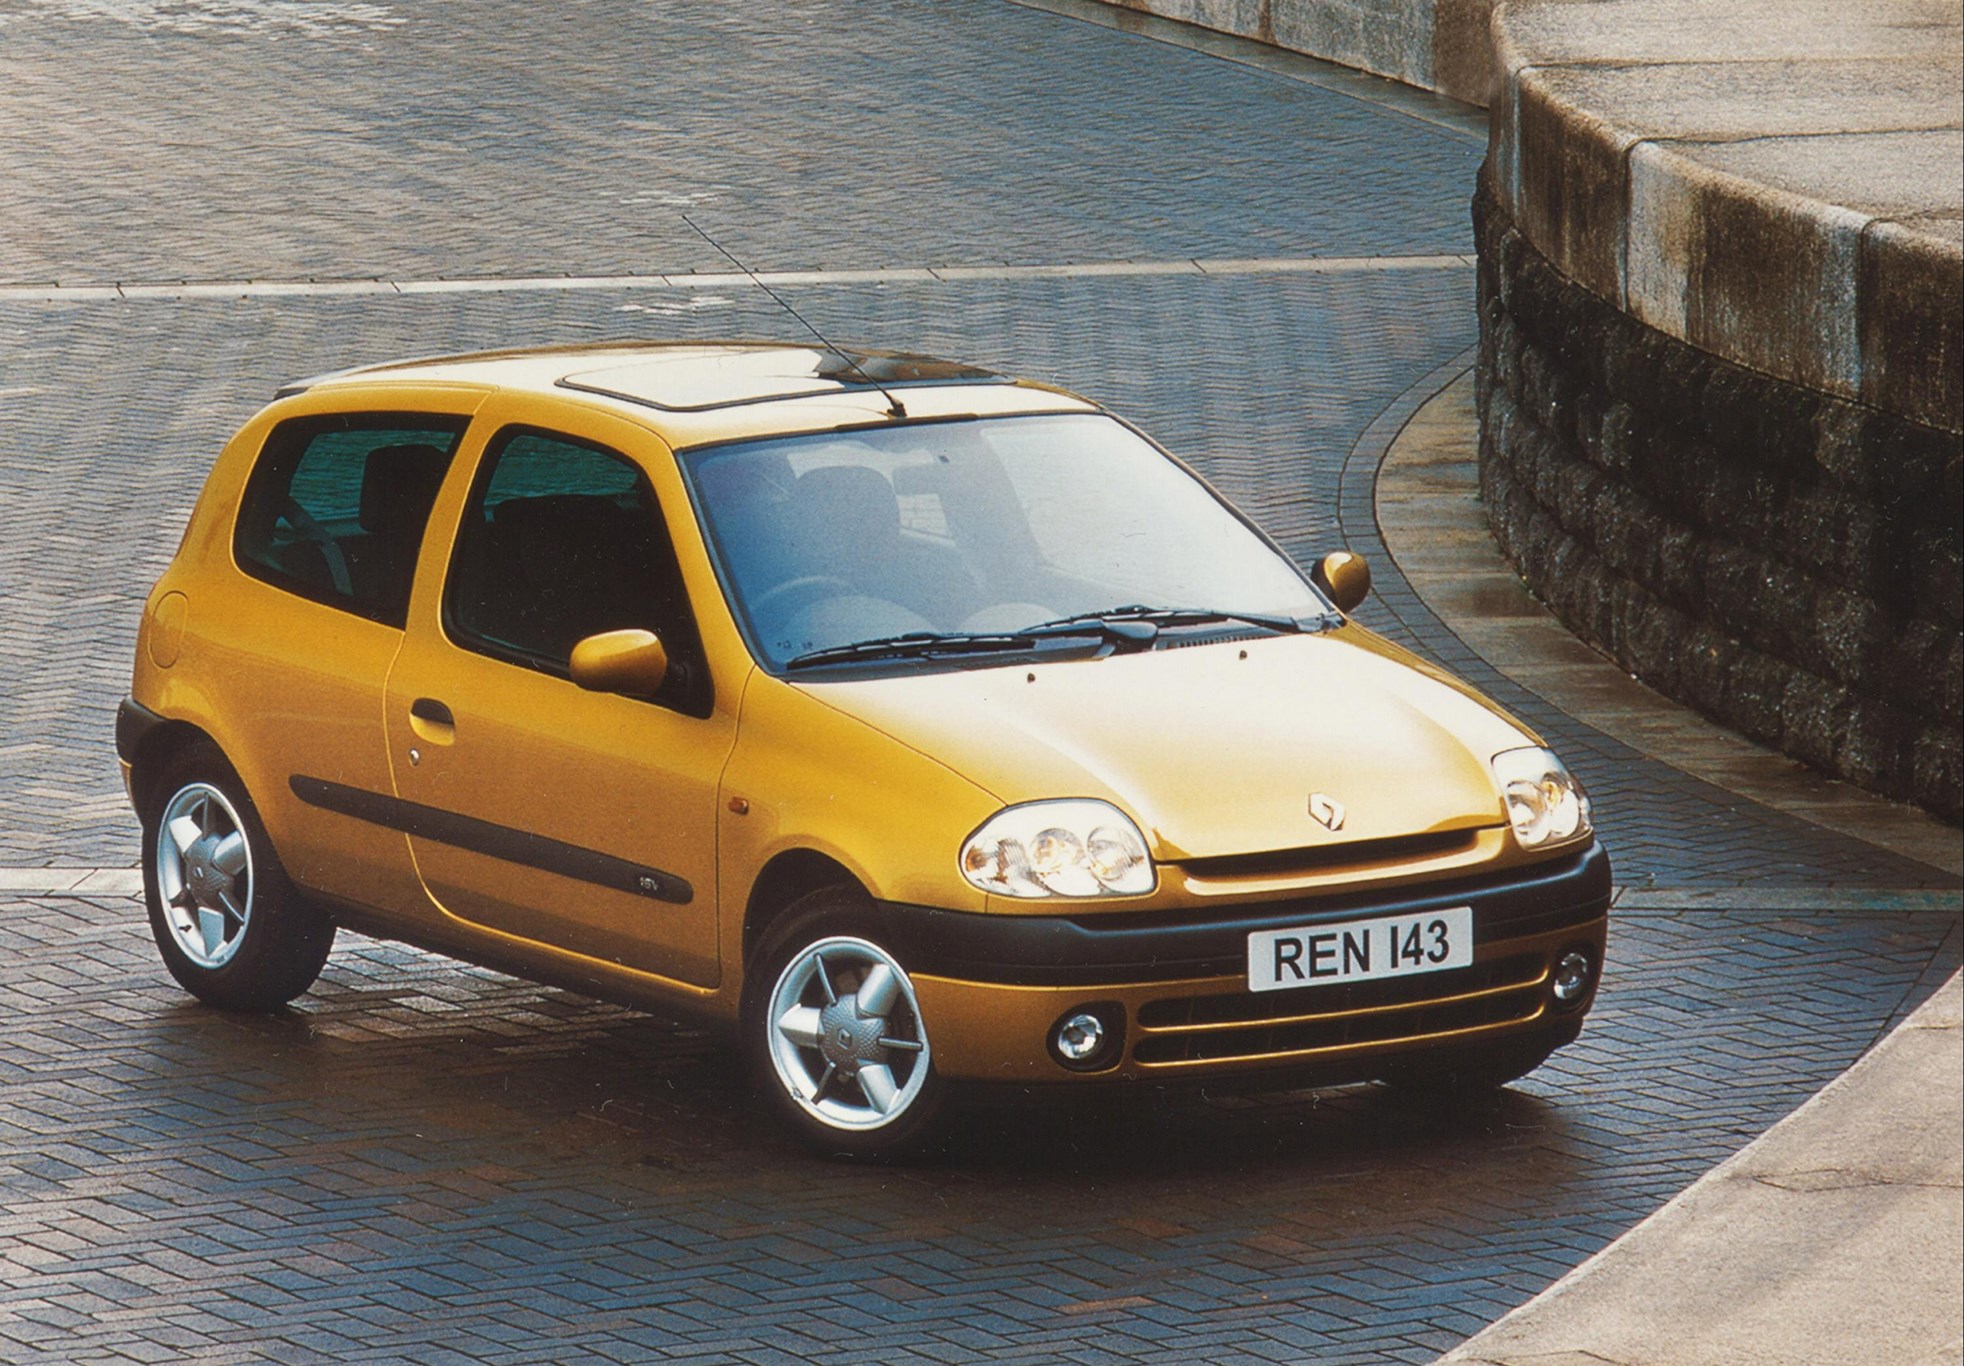 Renault Clio II buyers review 